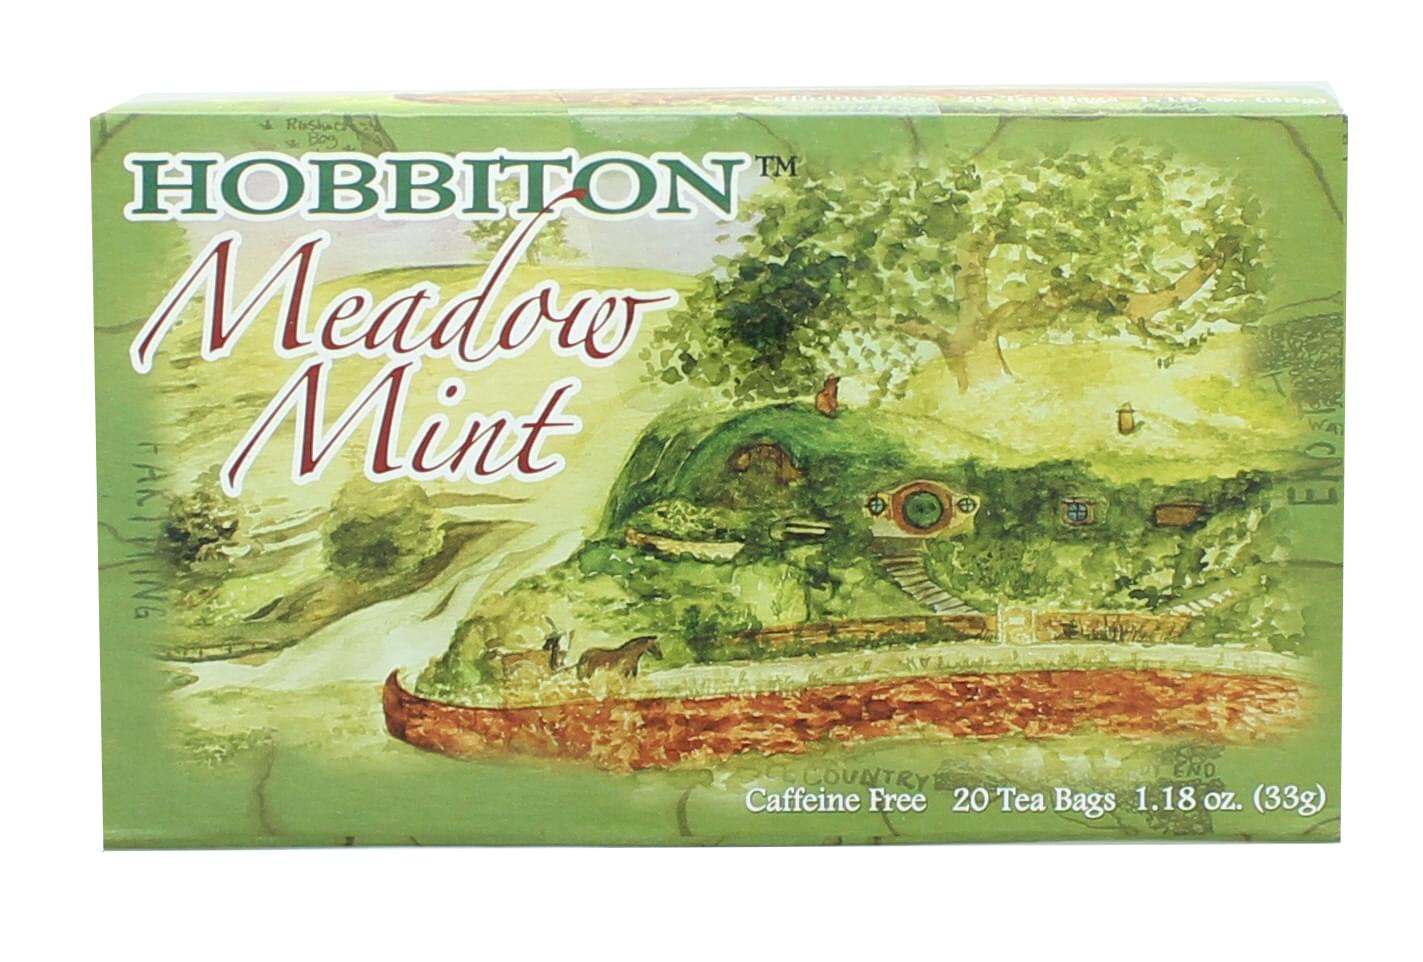 Hobbiton Meadow Mint Tea - 20 Bags